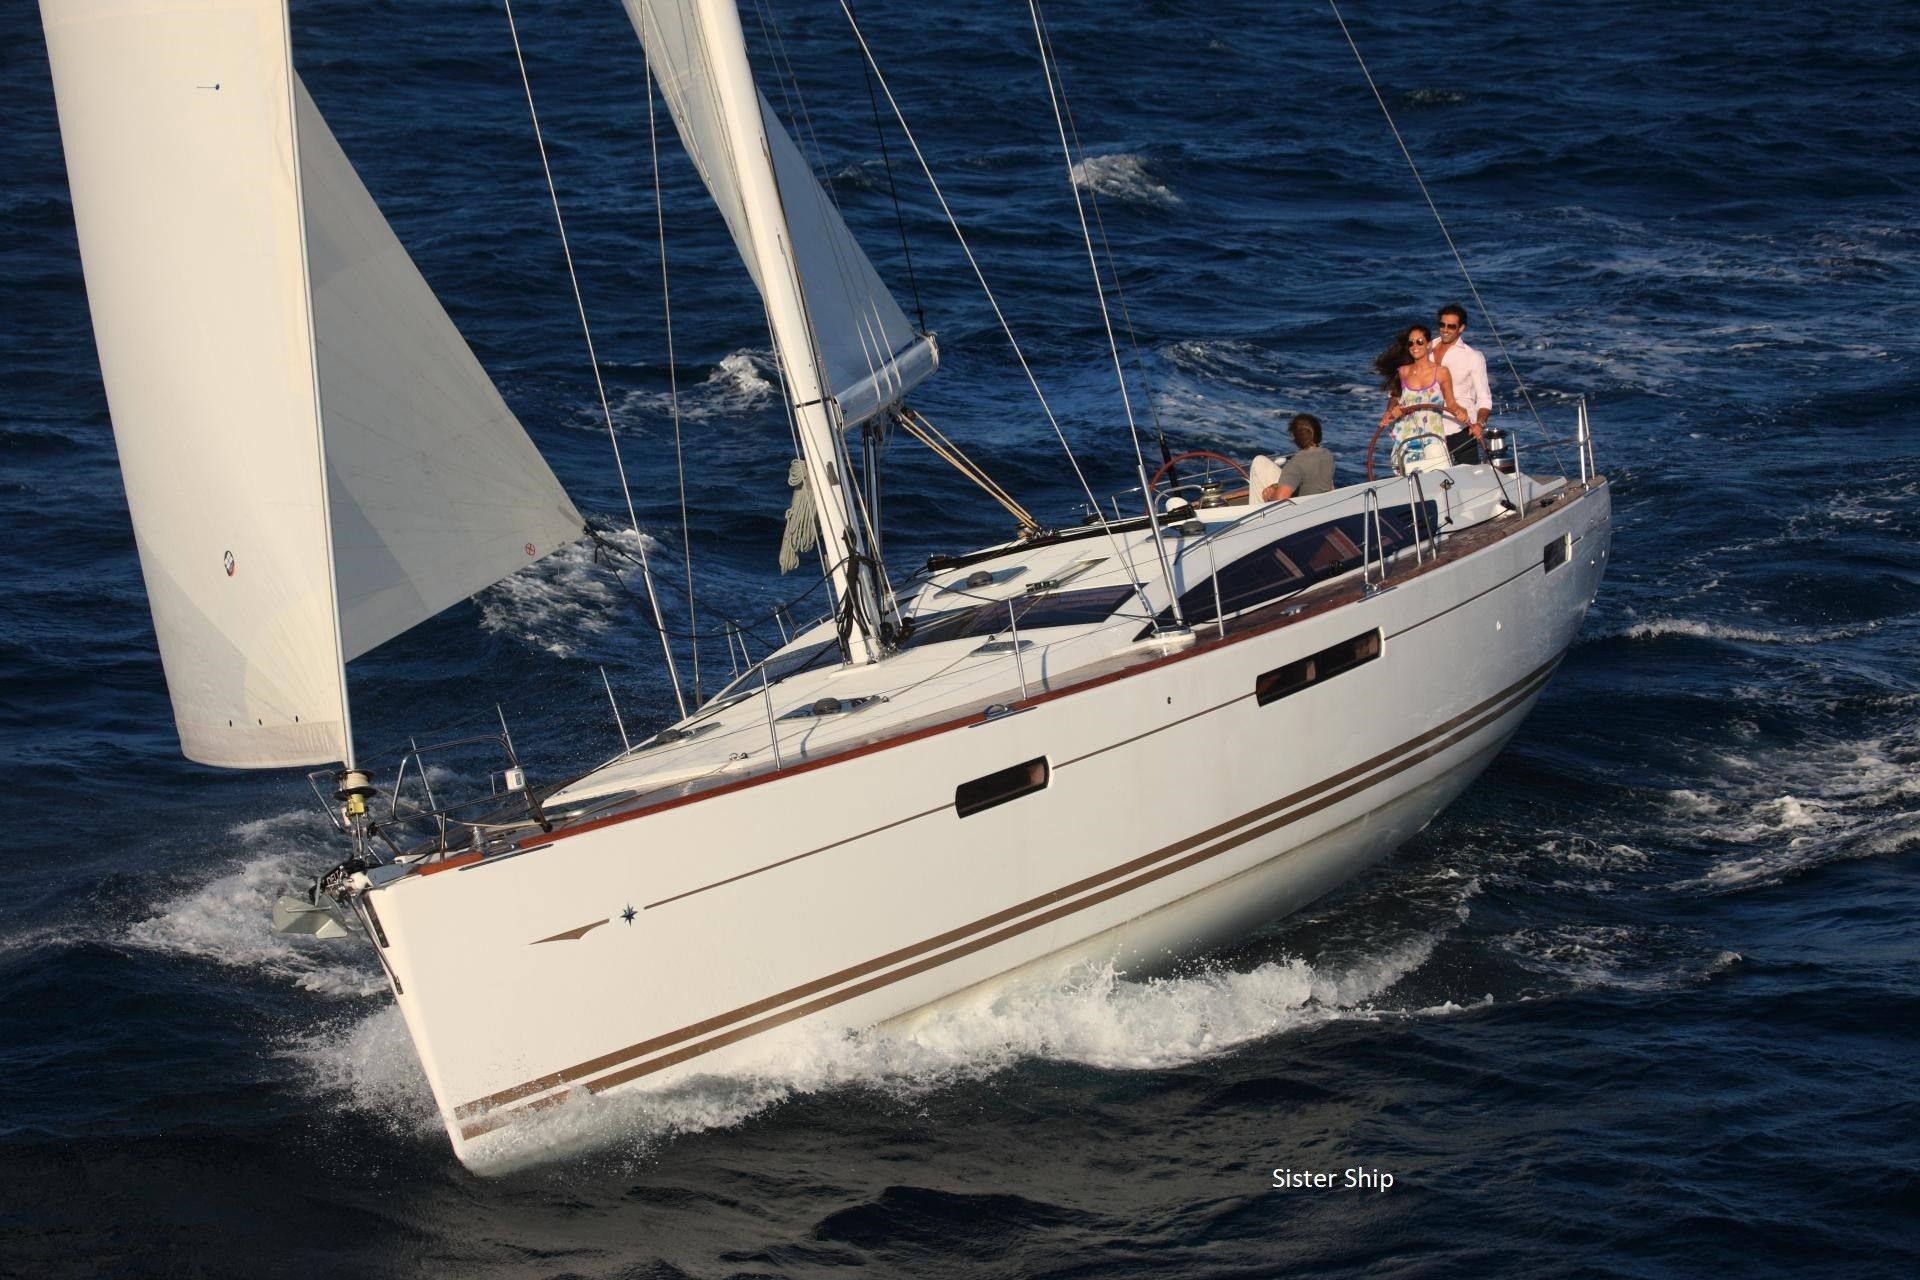 jeanneau 39i sailboat for sale